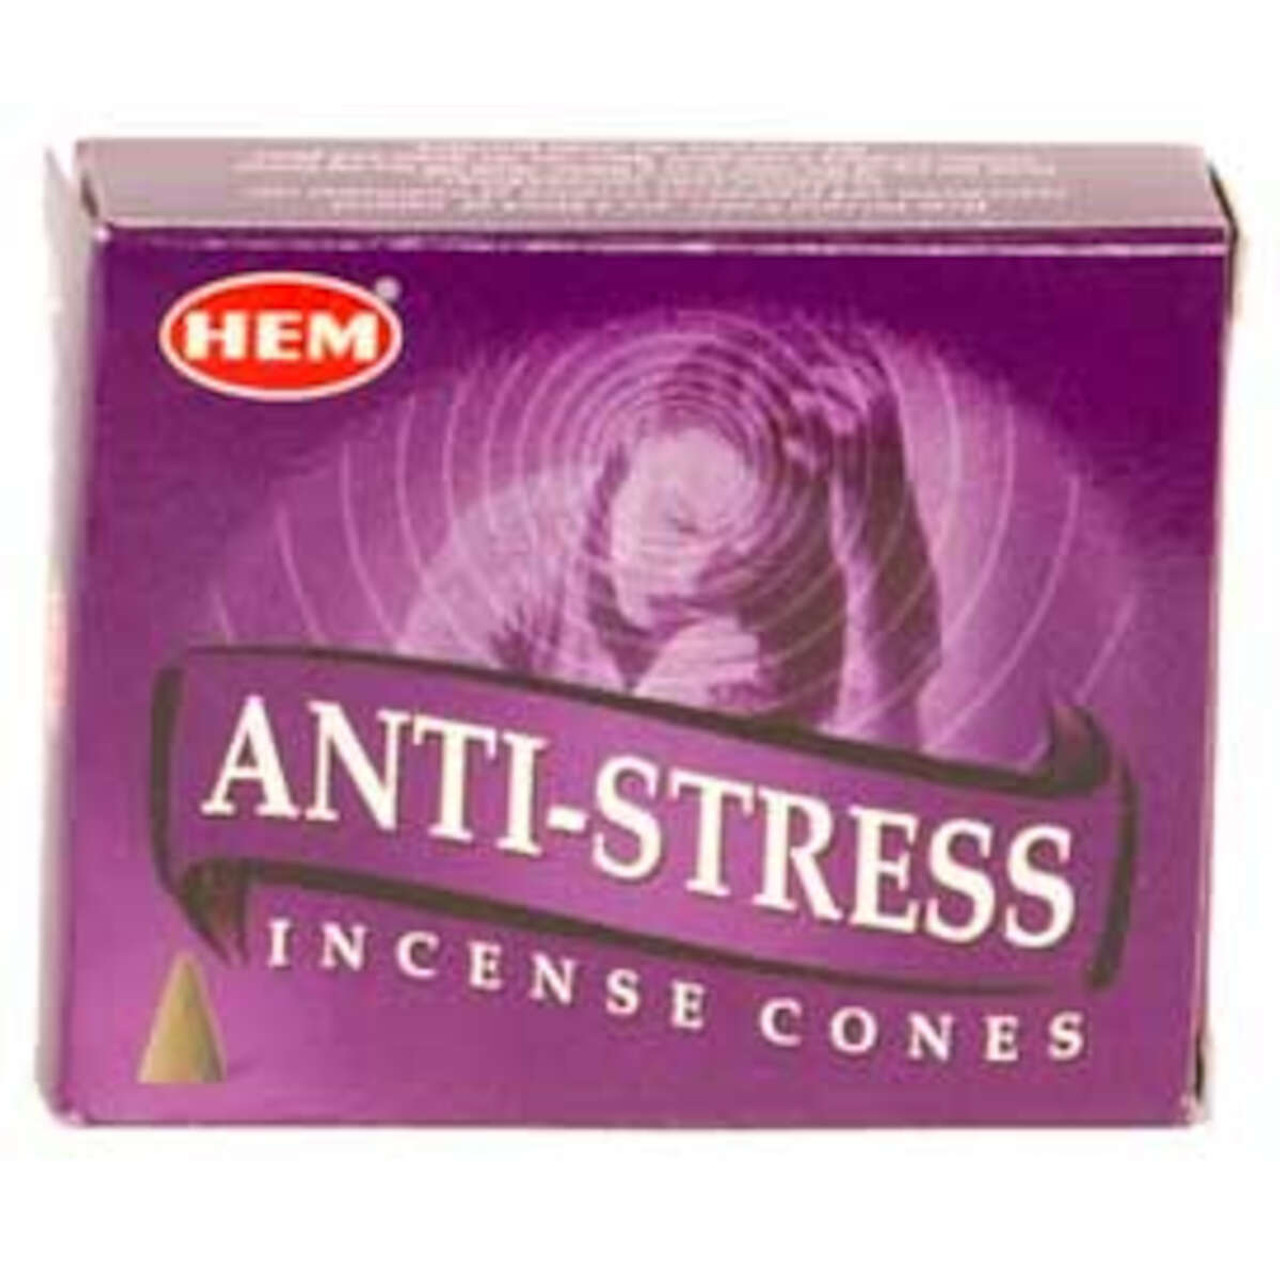 Anti-Stress HEM Incense Cones 10 pack